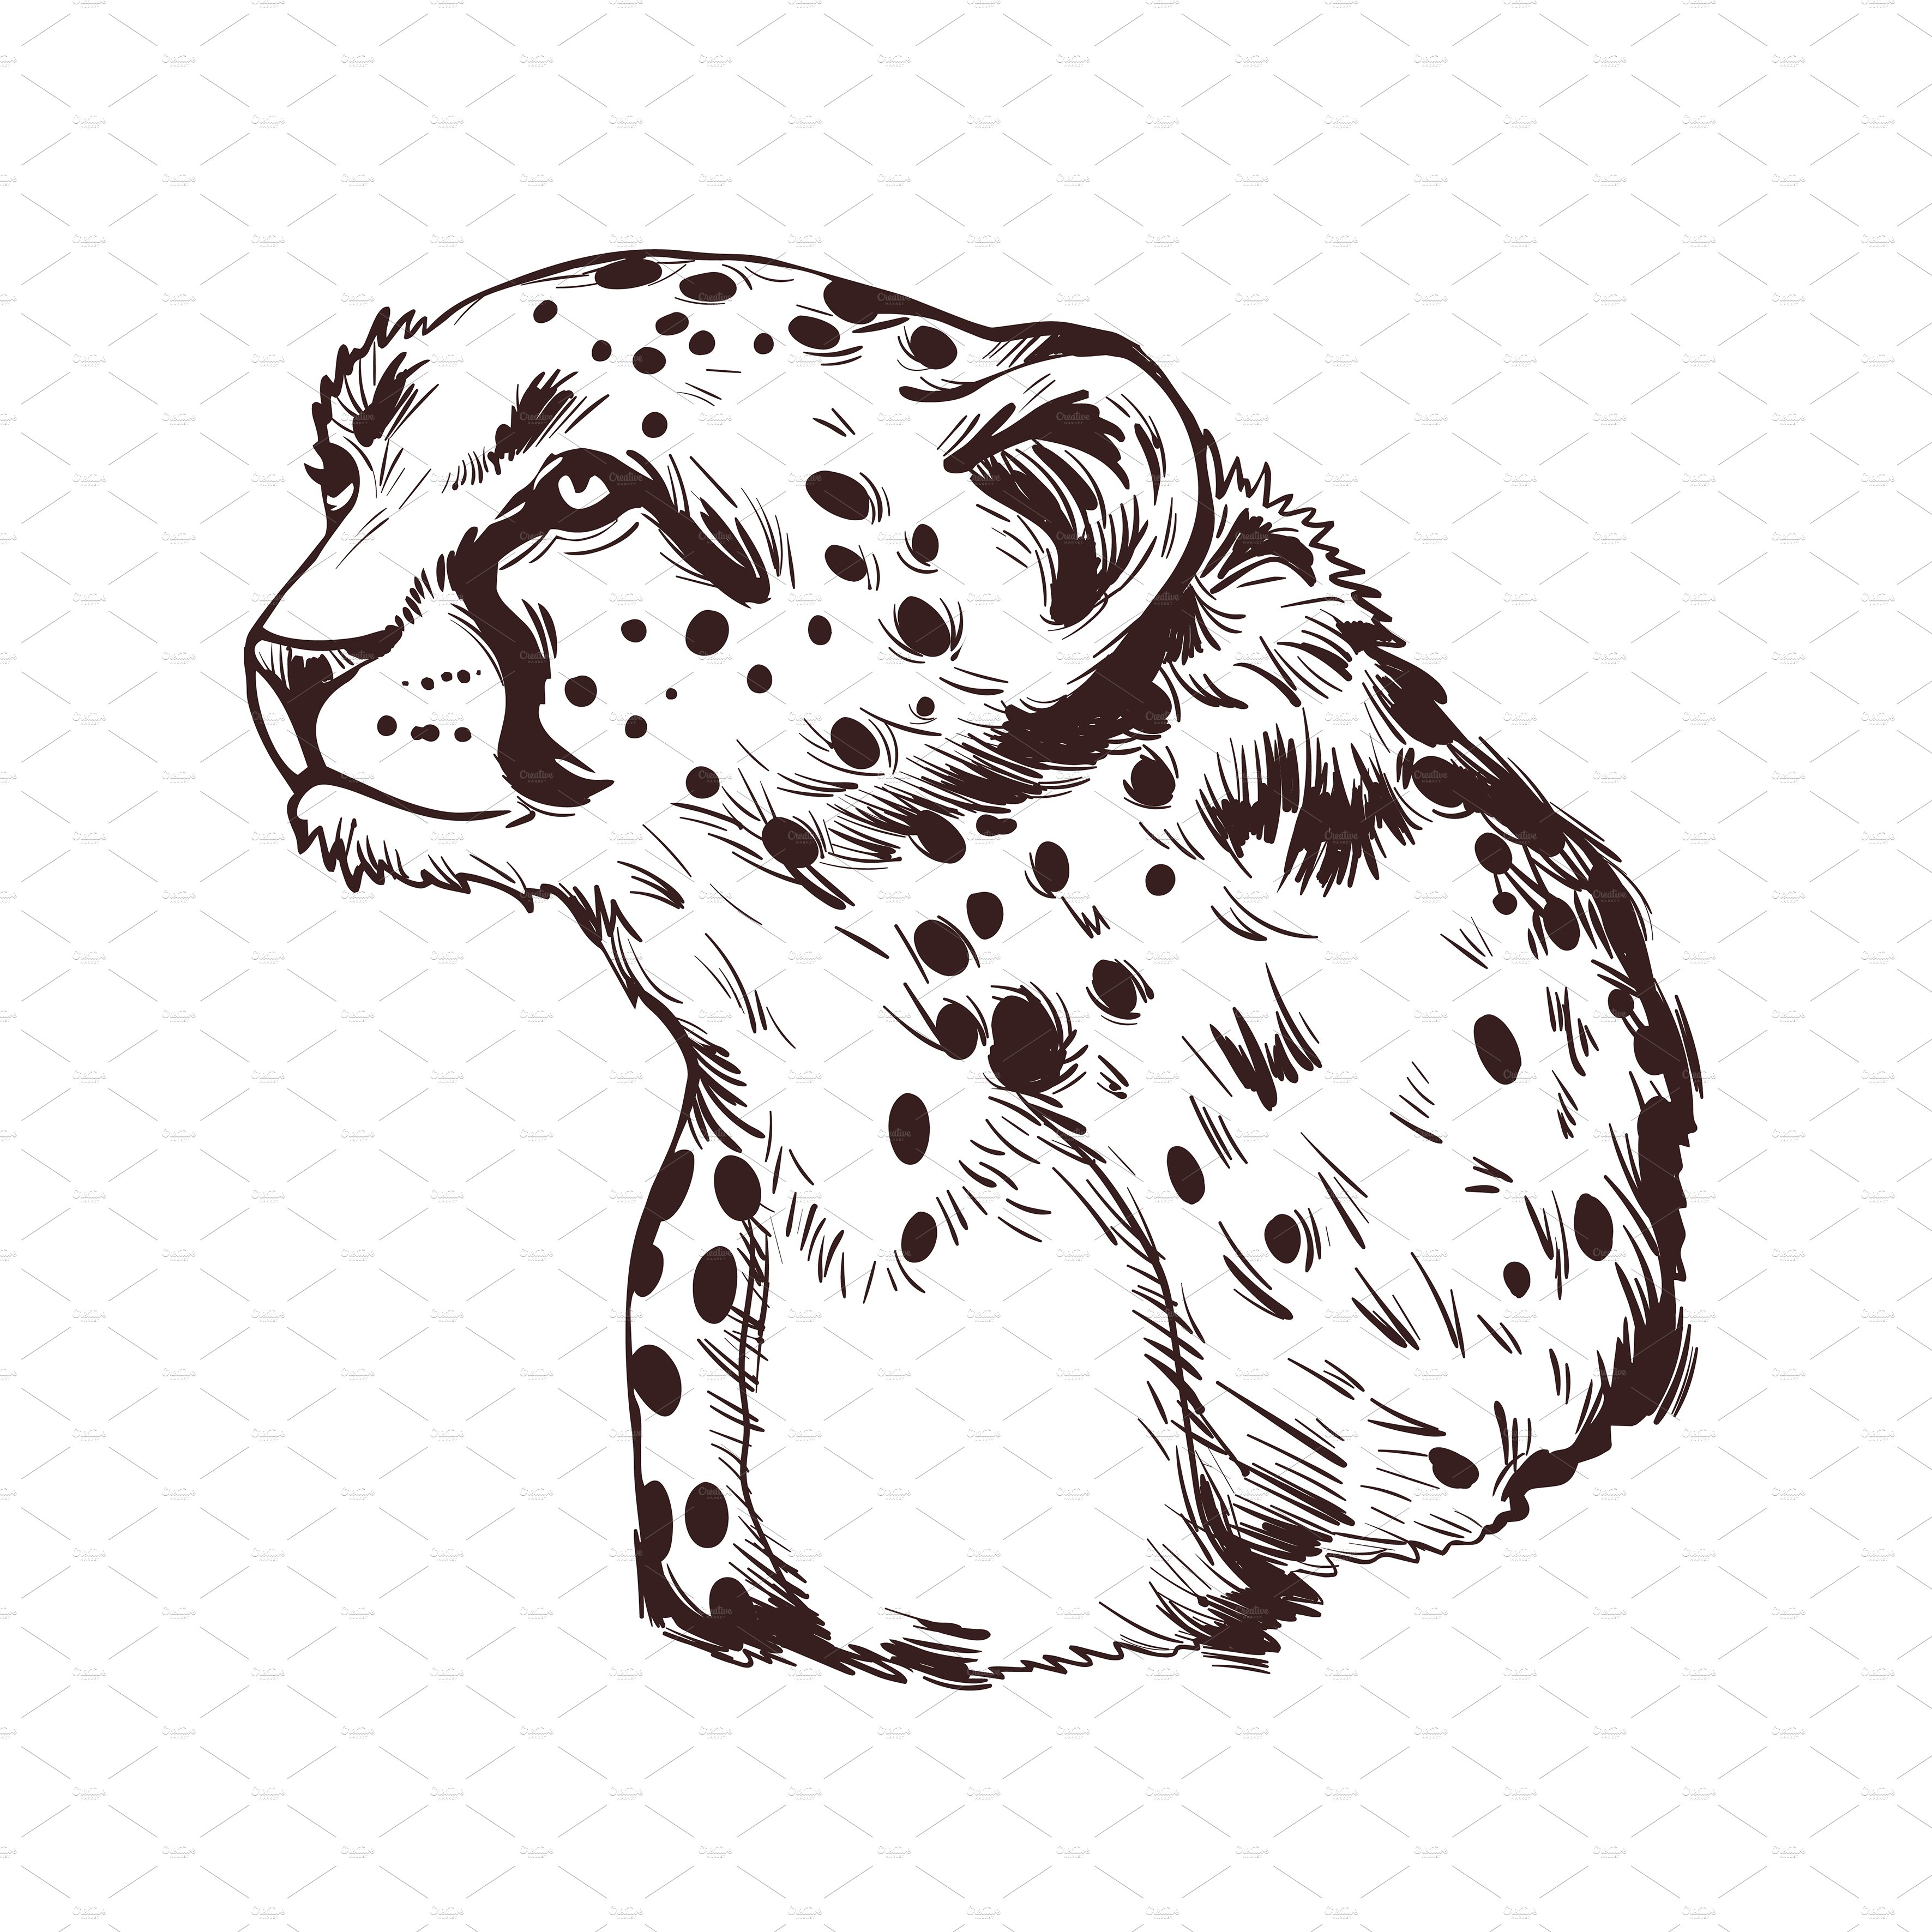 Sketch cheetah.